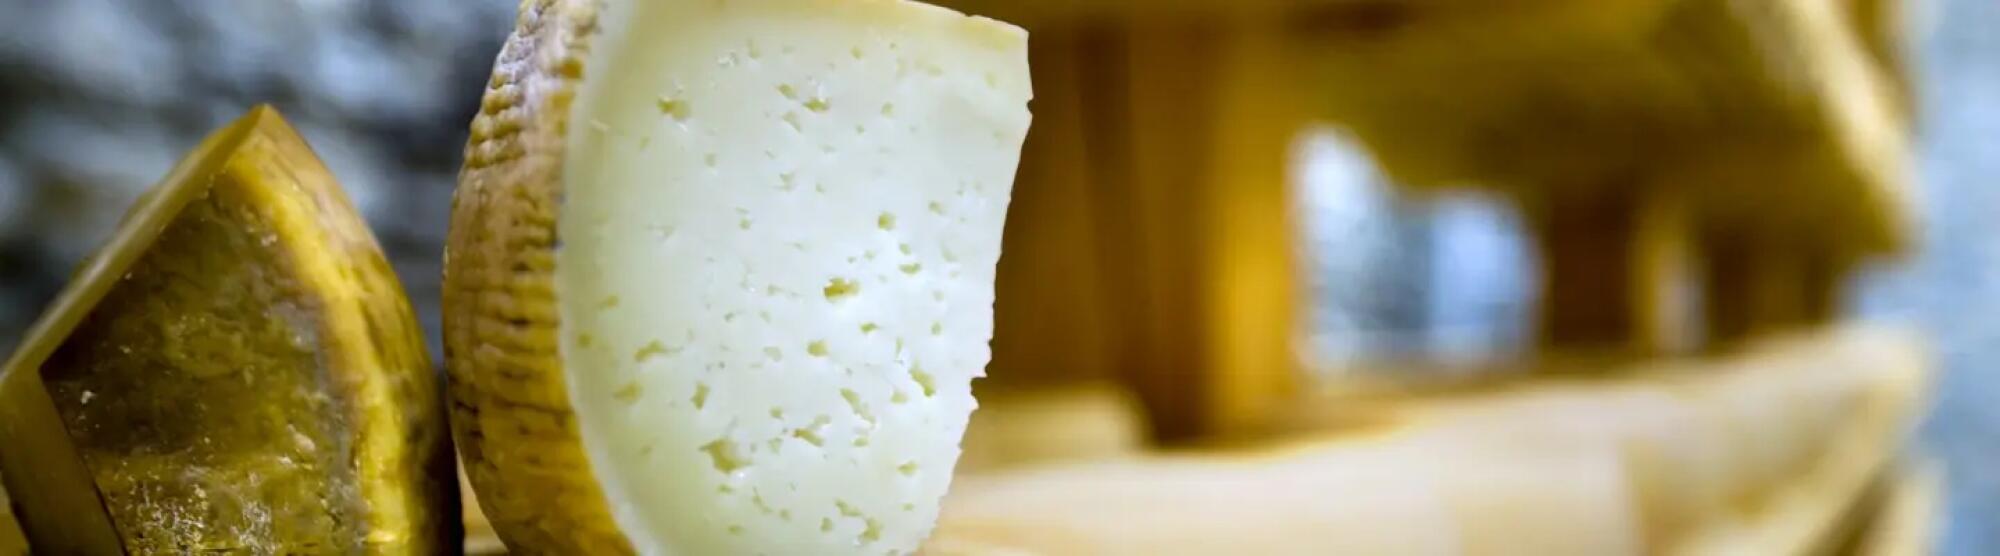 LA02_calories-fromage-de-brebis